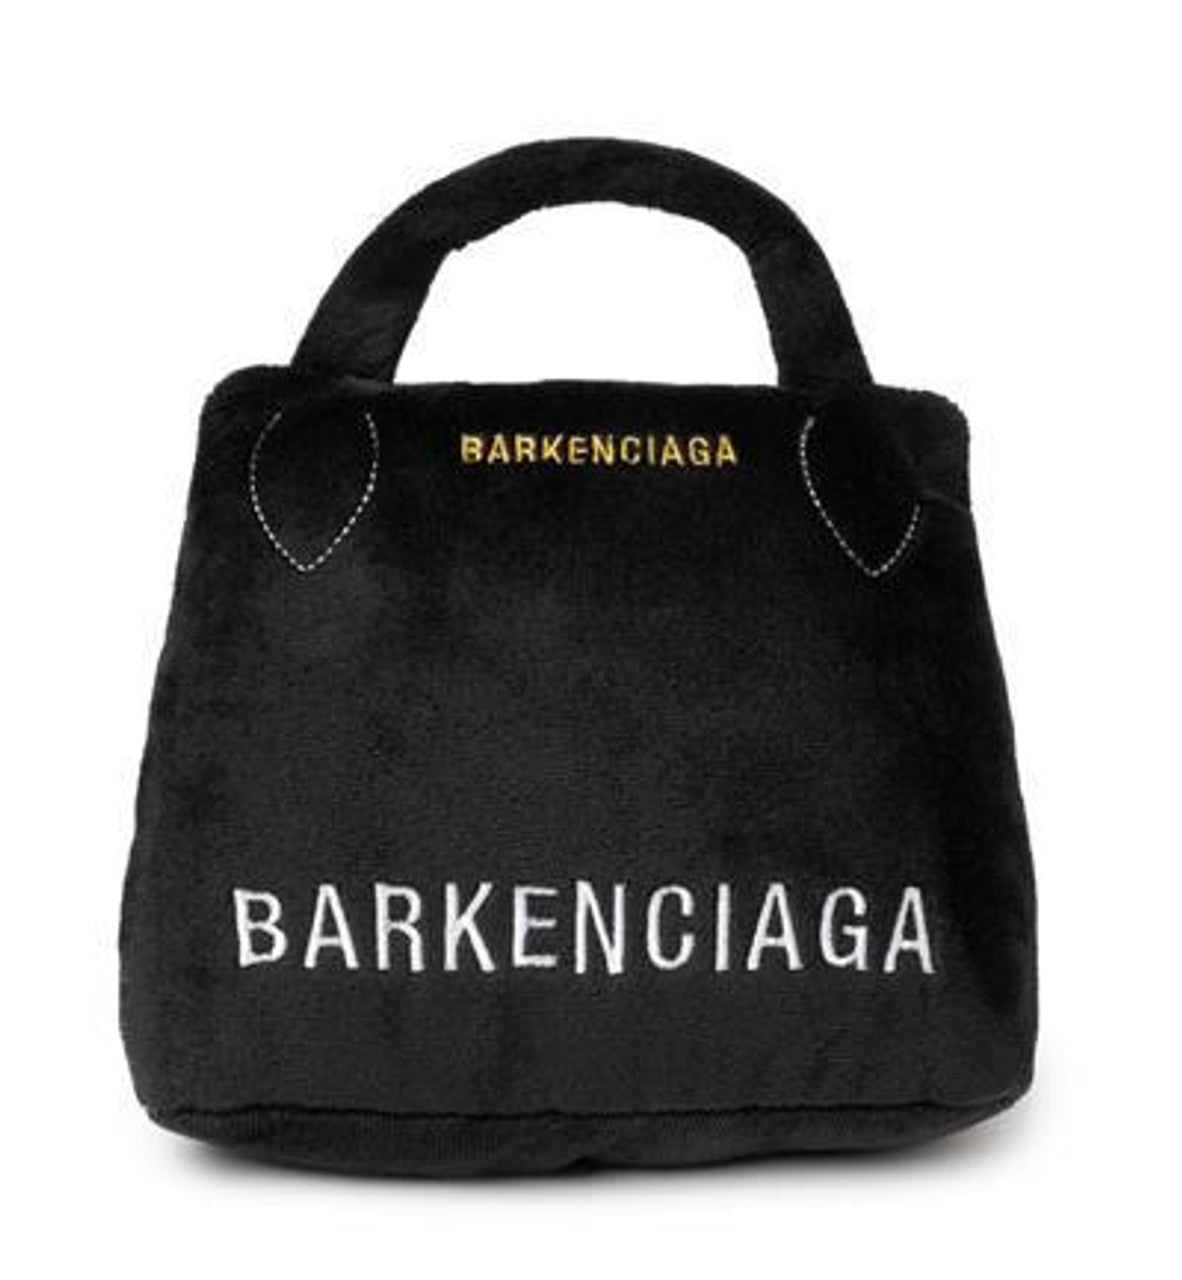 Barkenciaga Handbag Toy